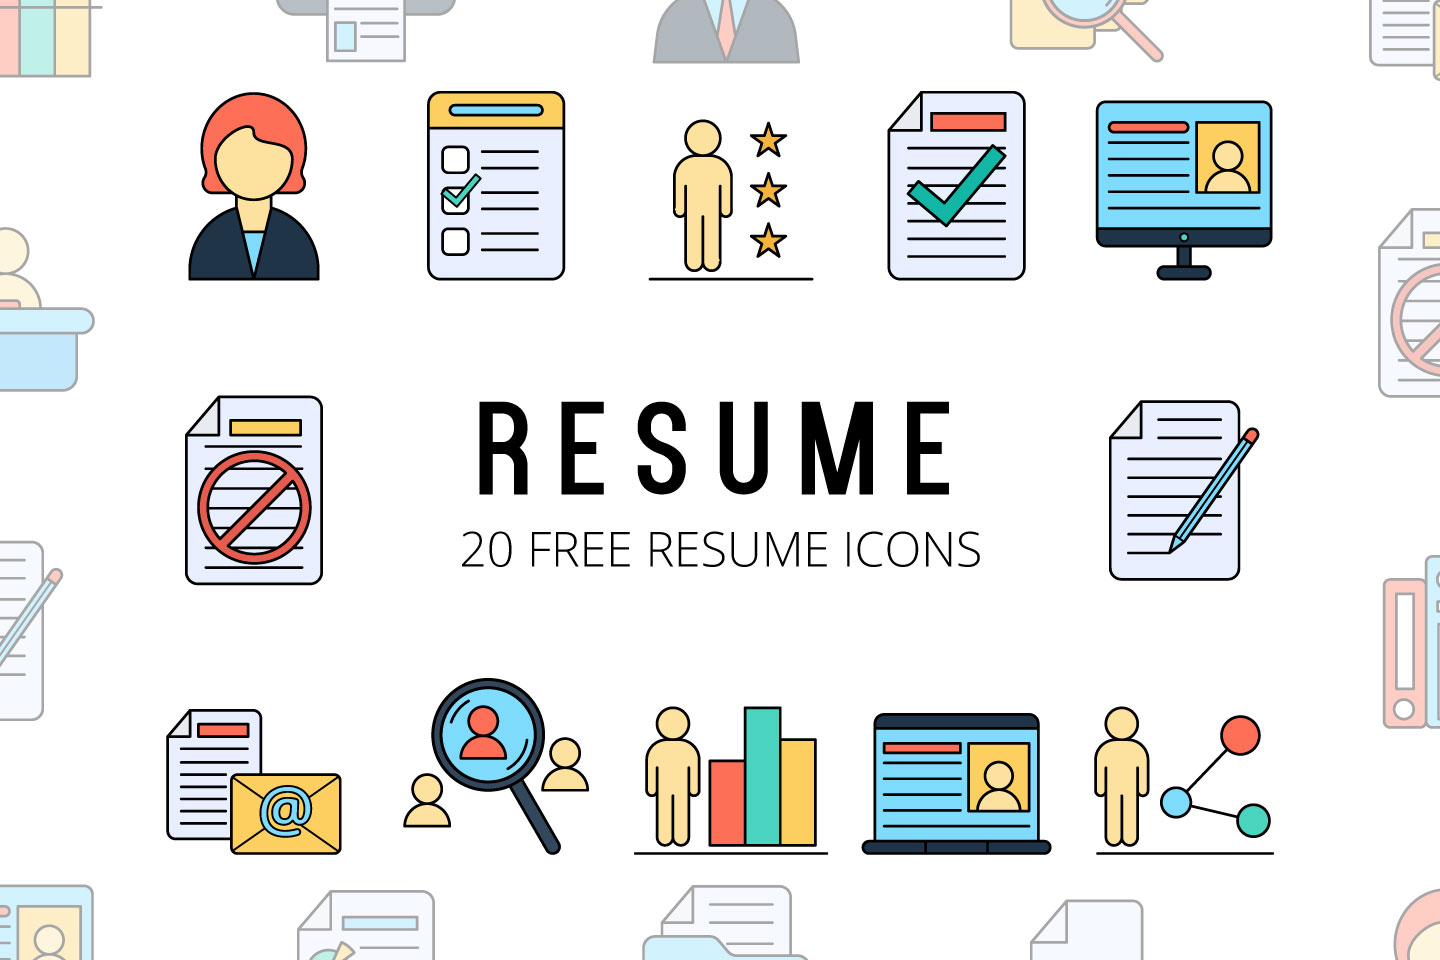 Download Resume Vector Free Icon Set - GraphicSurf.com